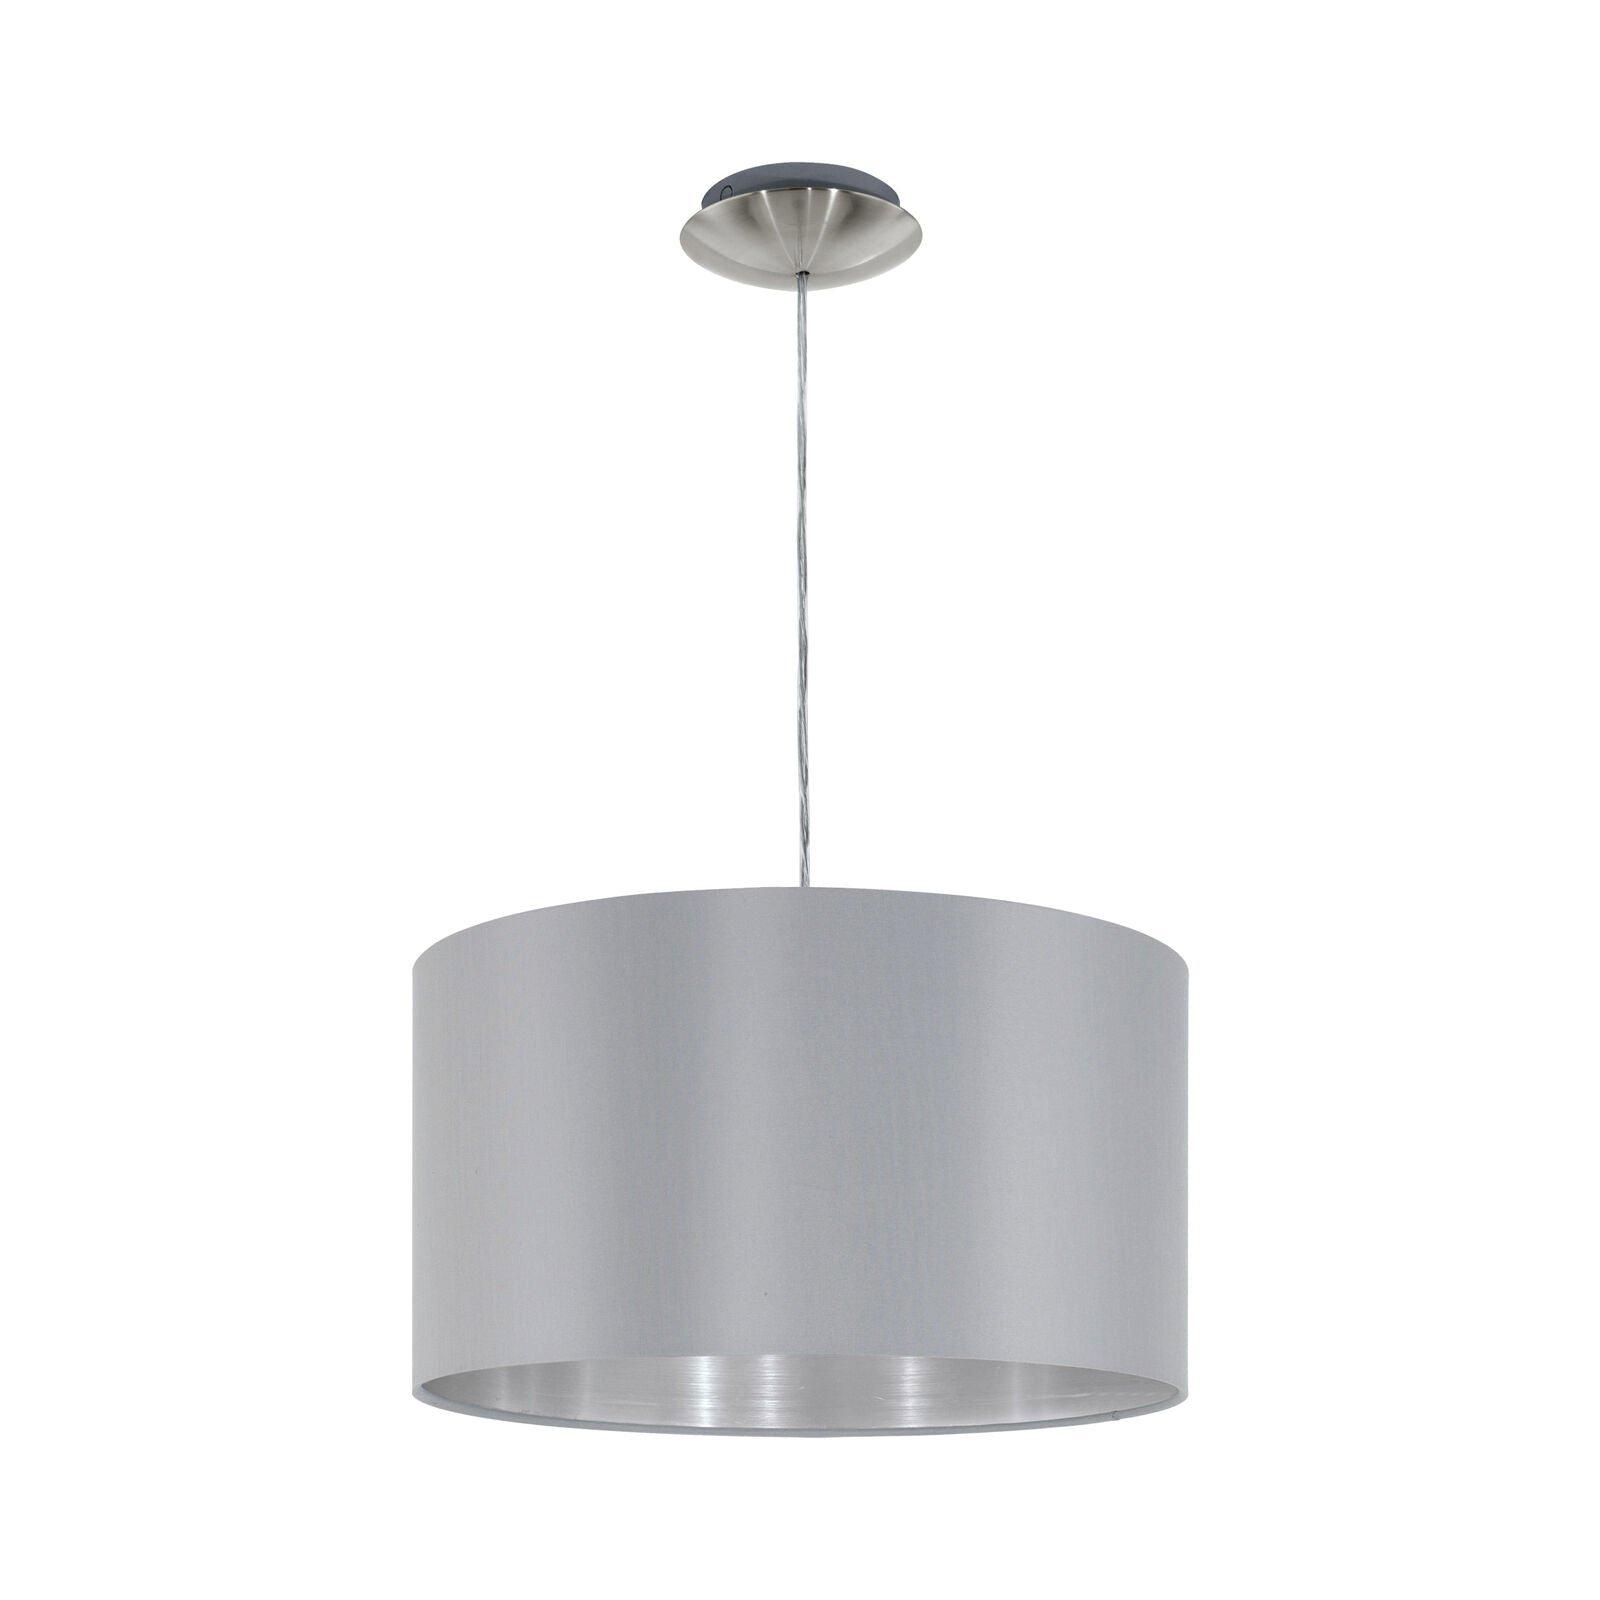 Pendant Light Colour Satin Nickel Steel Shade Grey Silver Fabric Bulb E27 1x60W